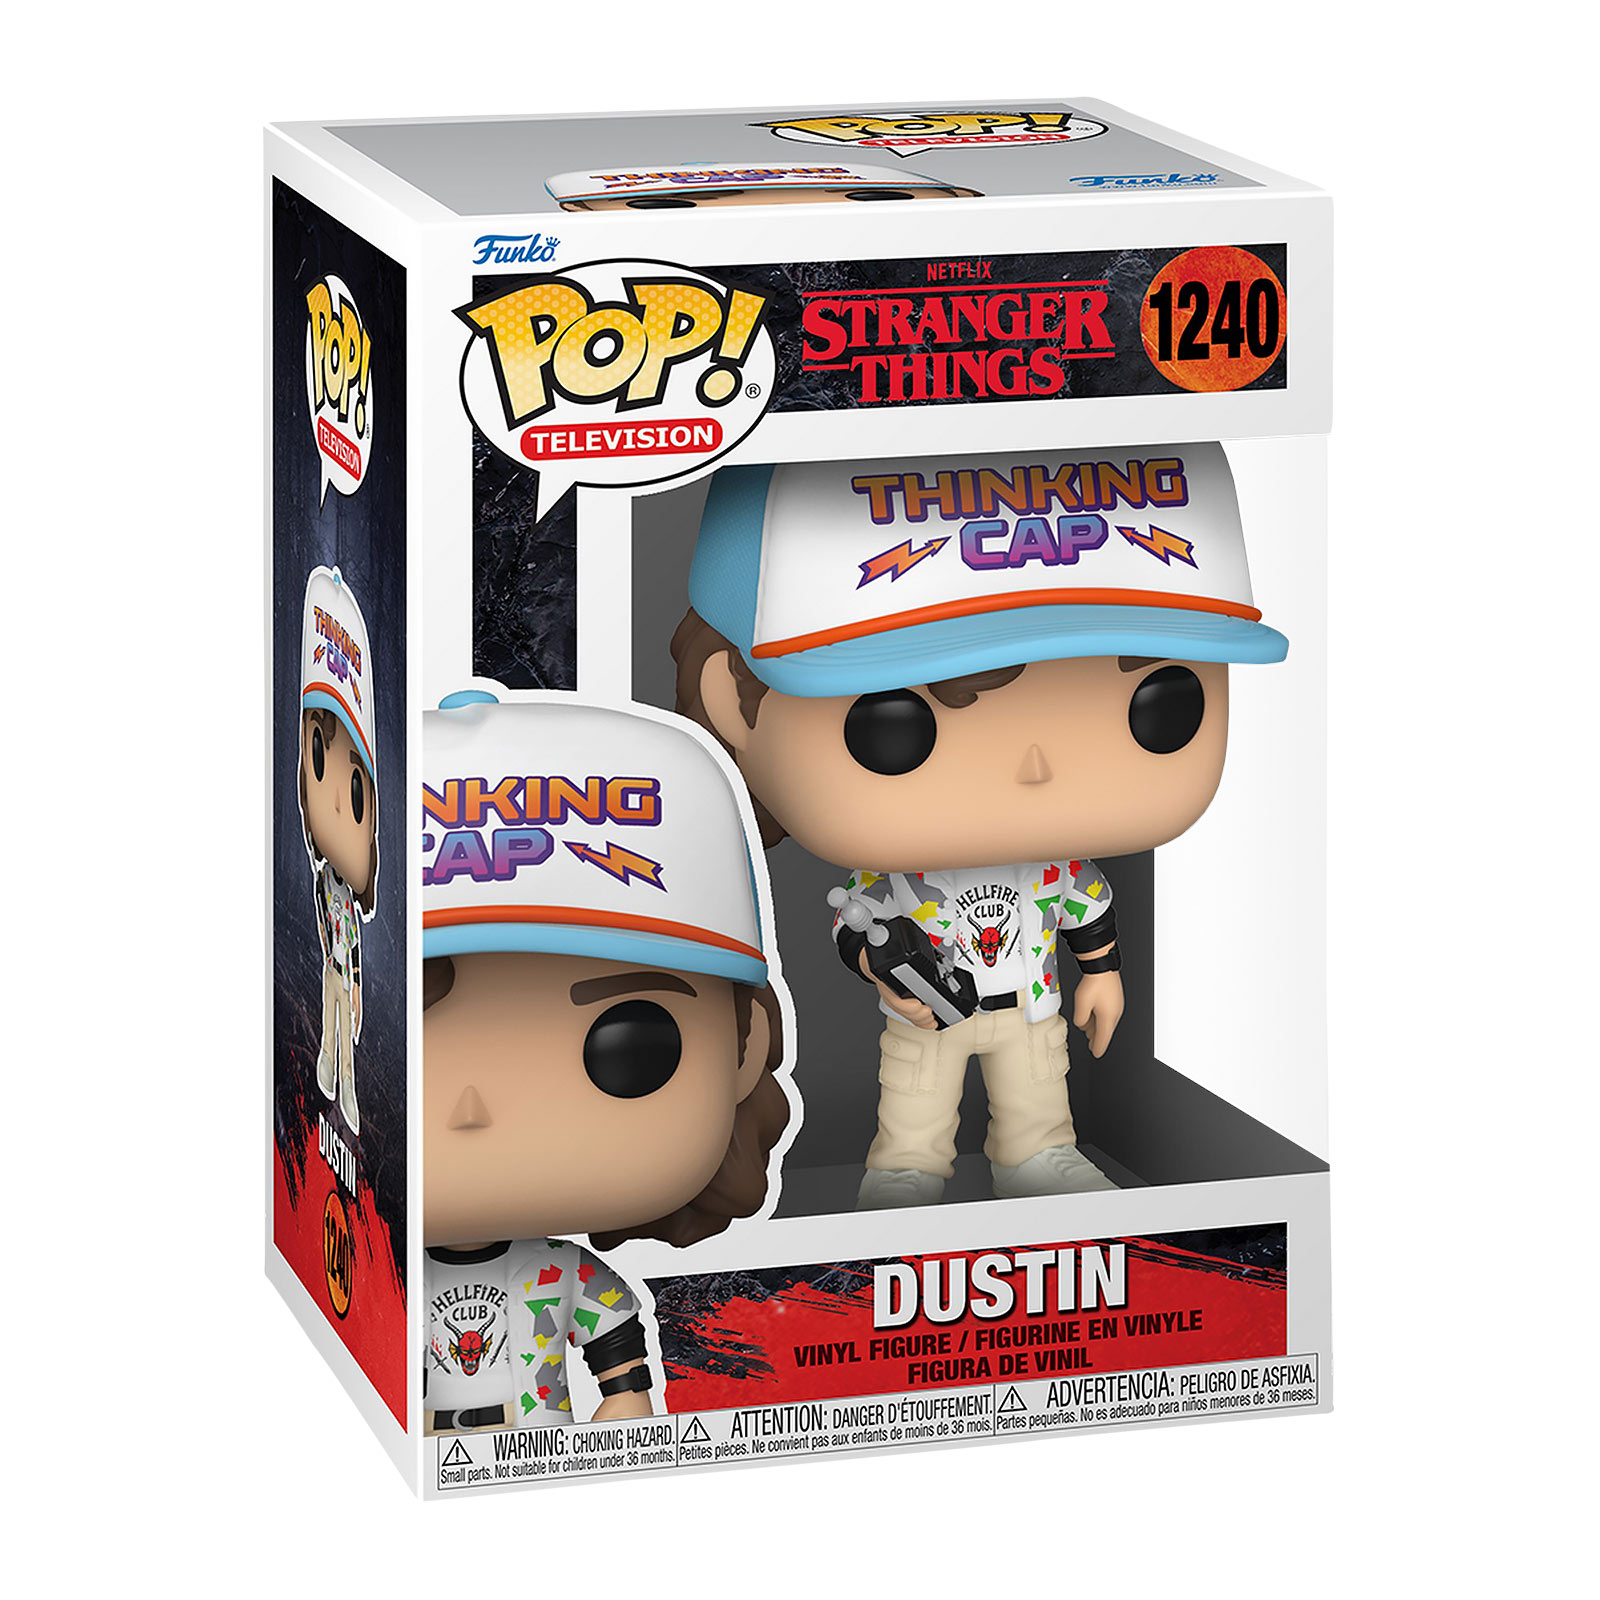 Dustin Henderson Season 4 Funko Pop Figur - Stranger Things